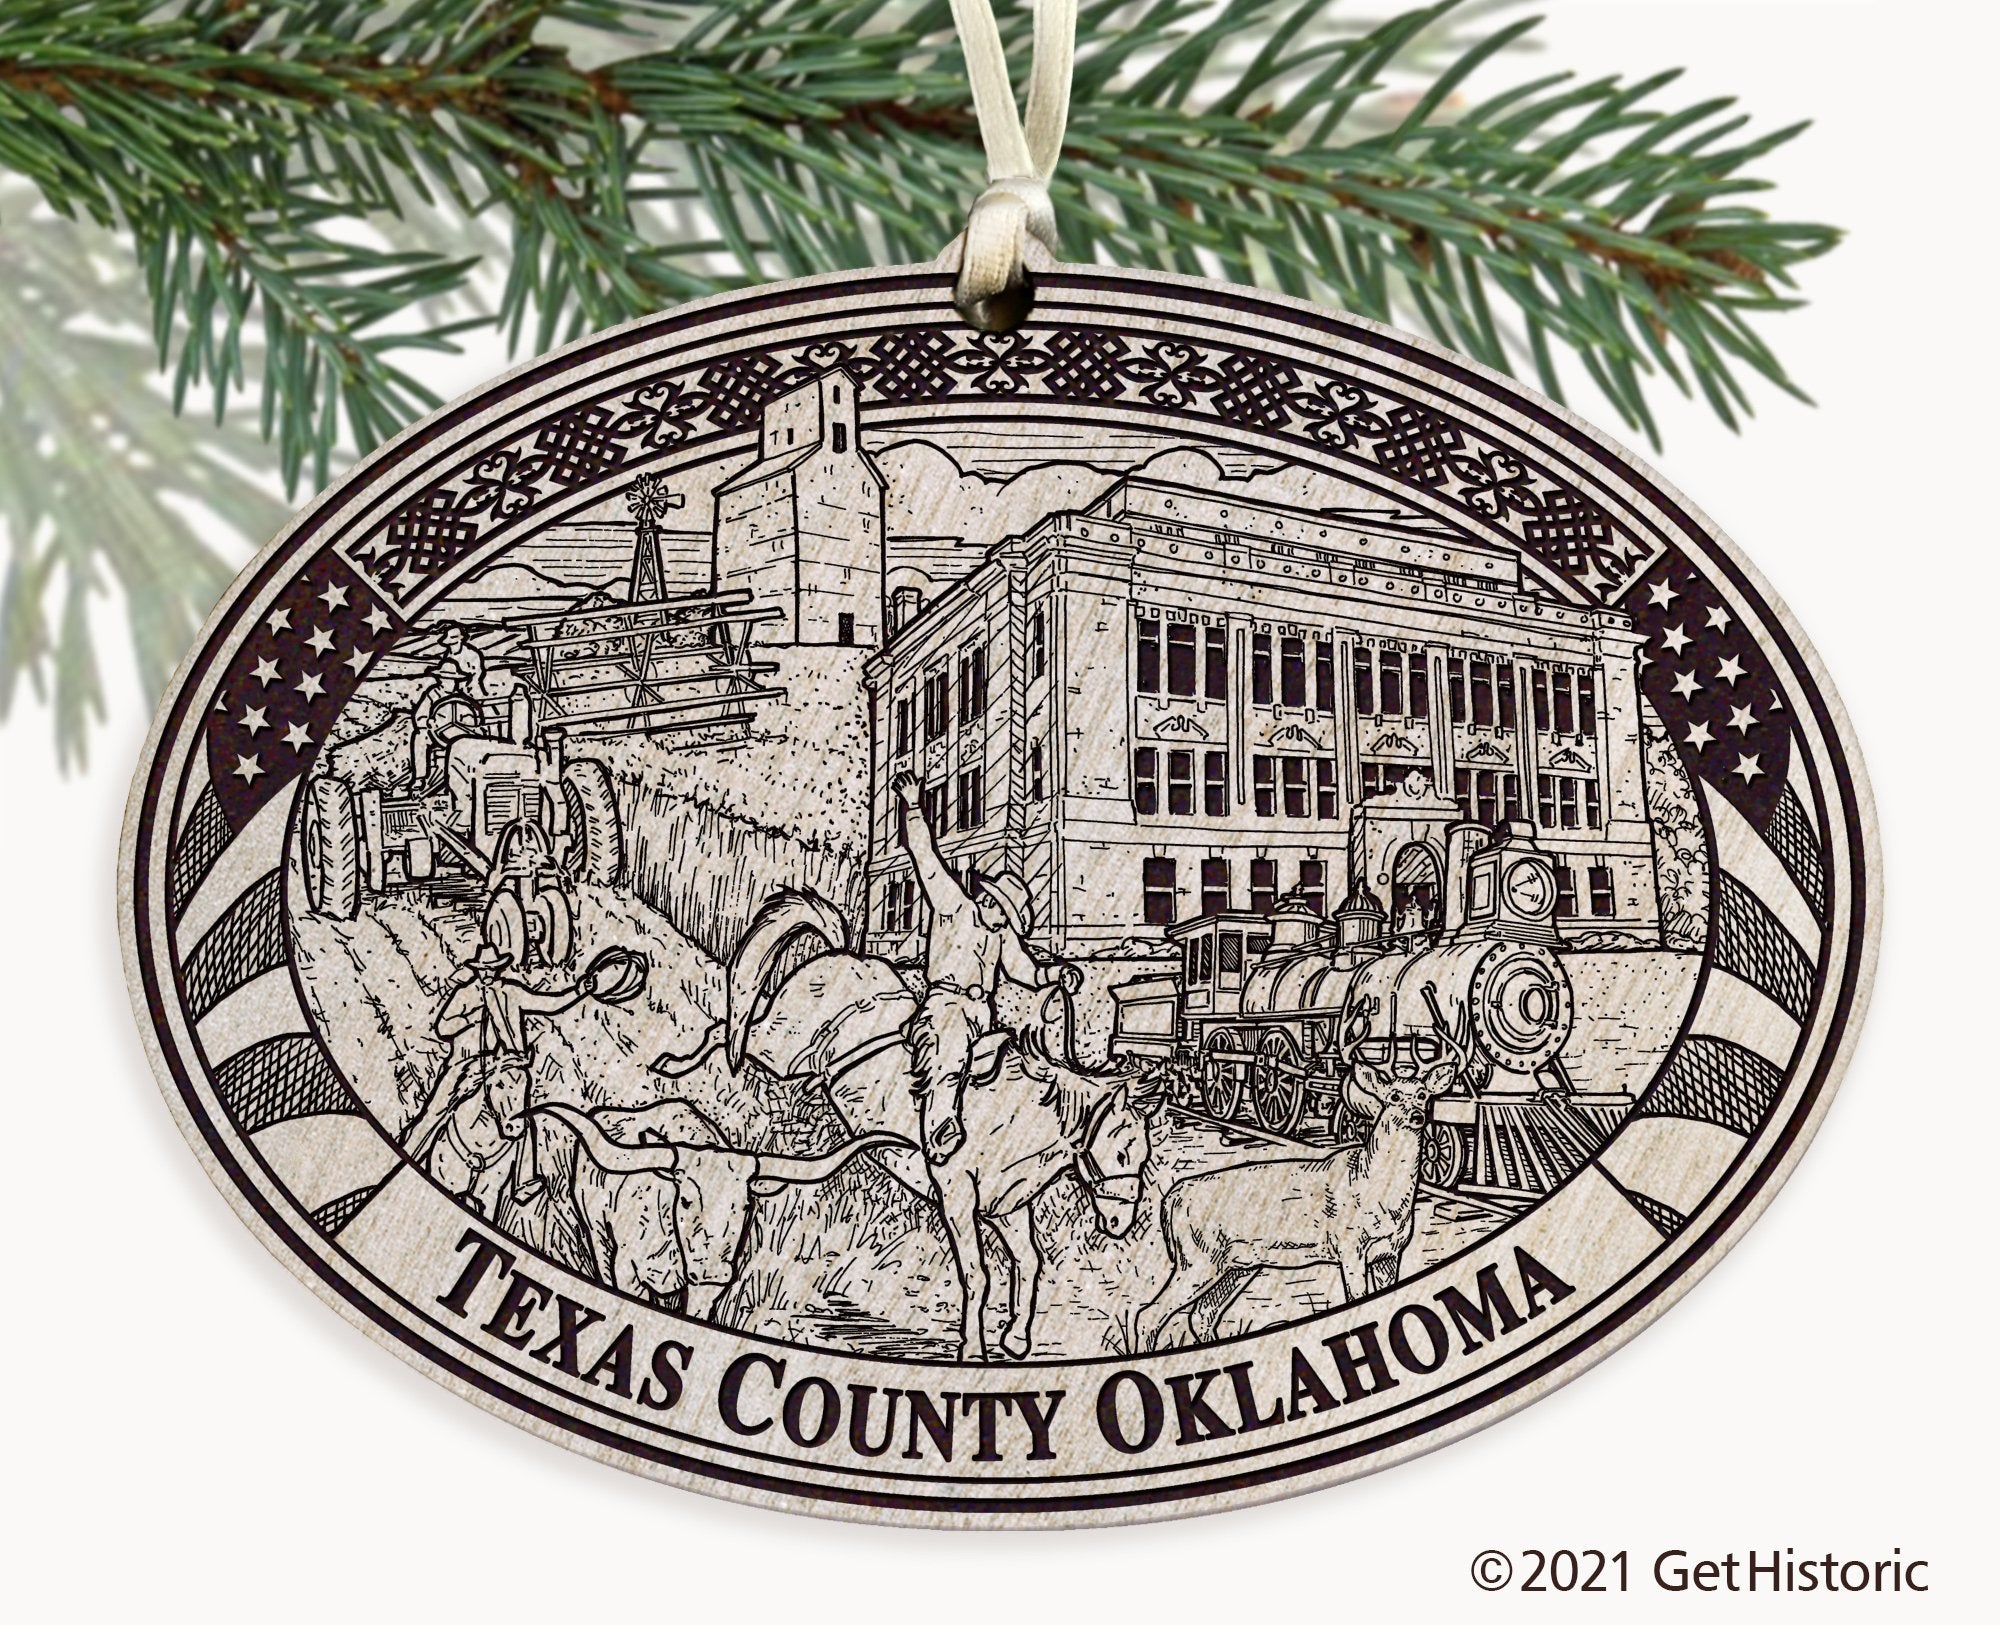 Texas County Oklahoma Engraved Ornament